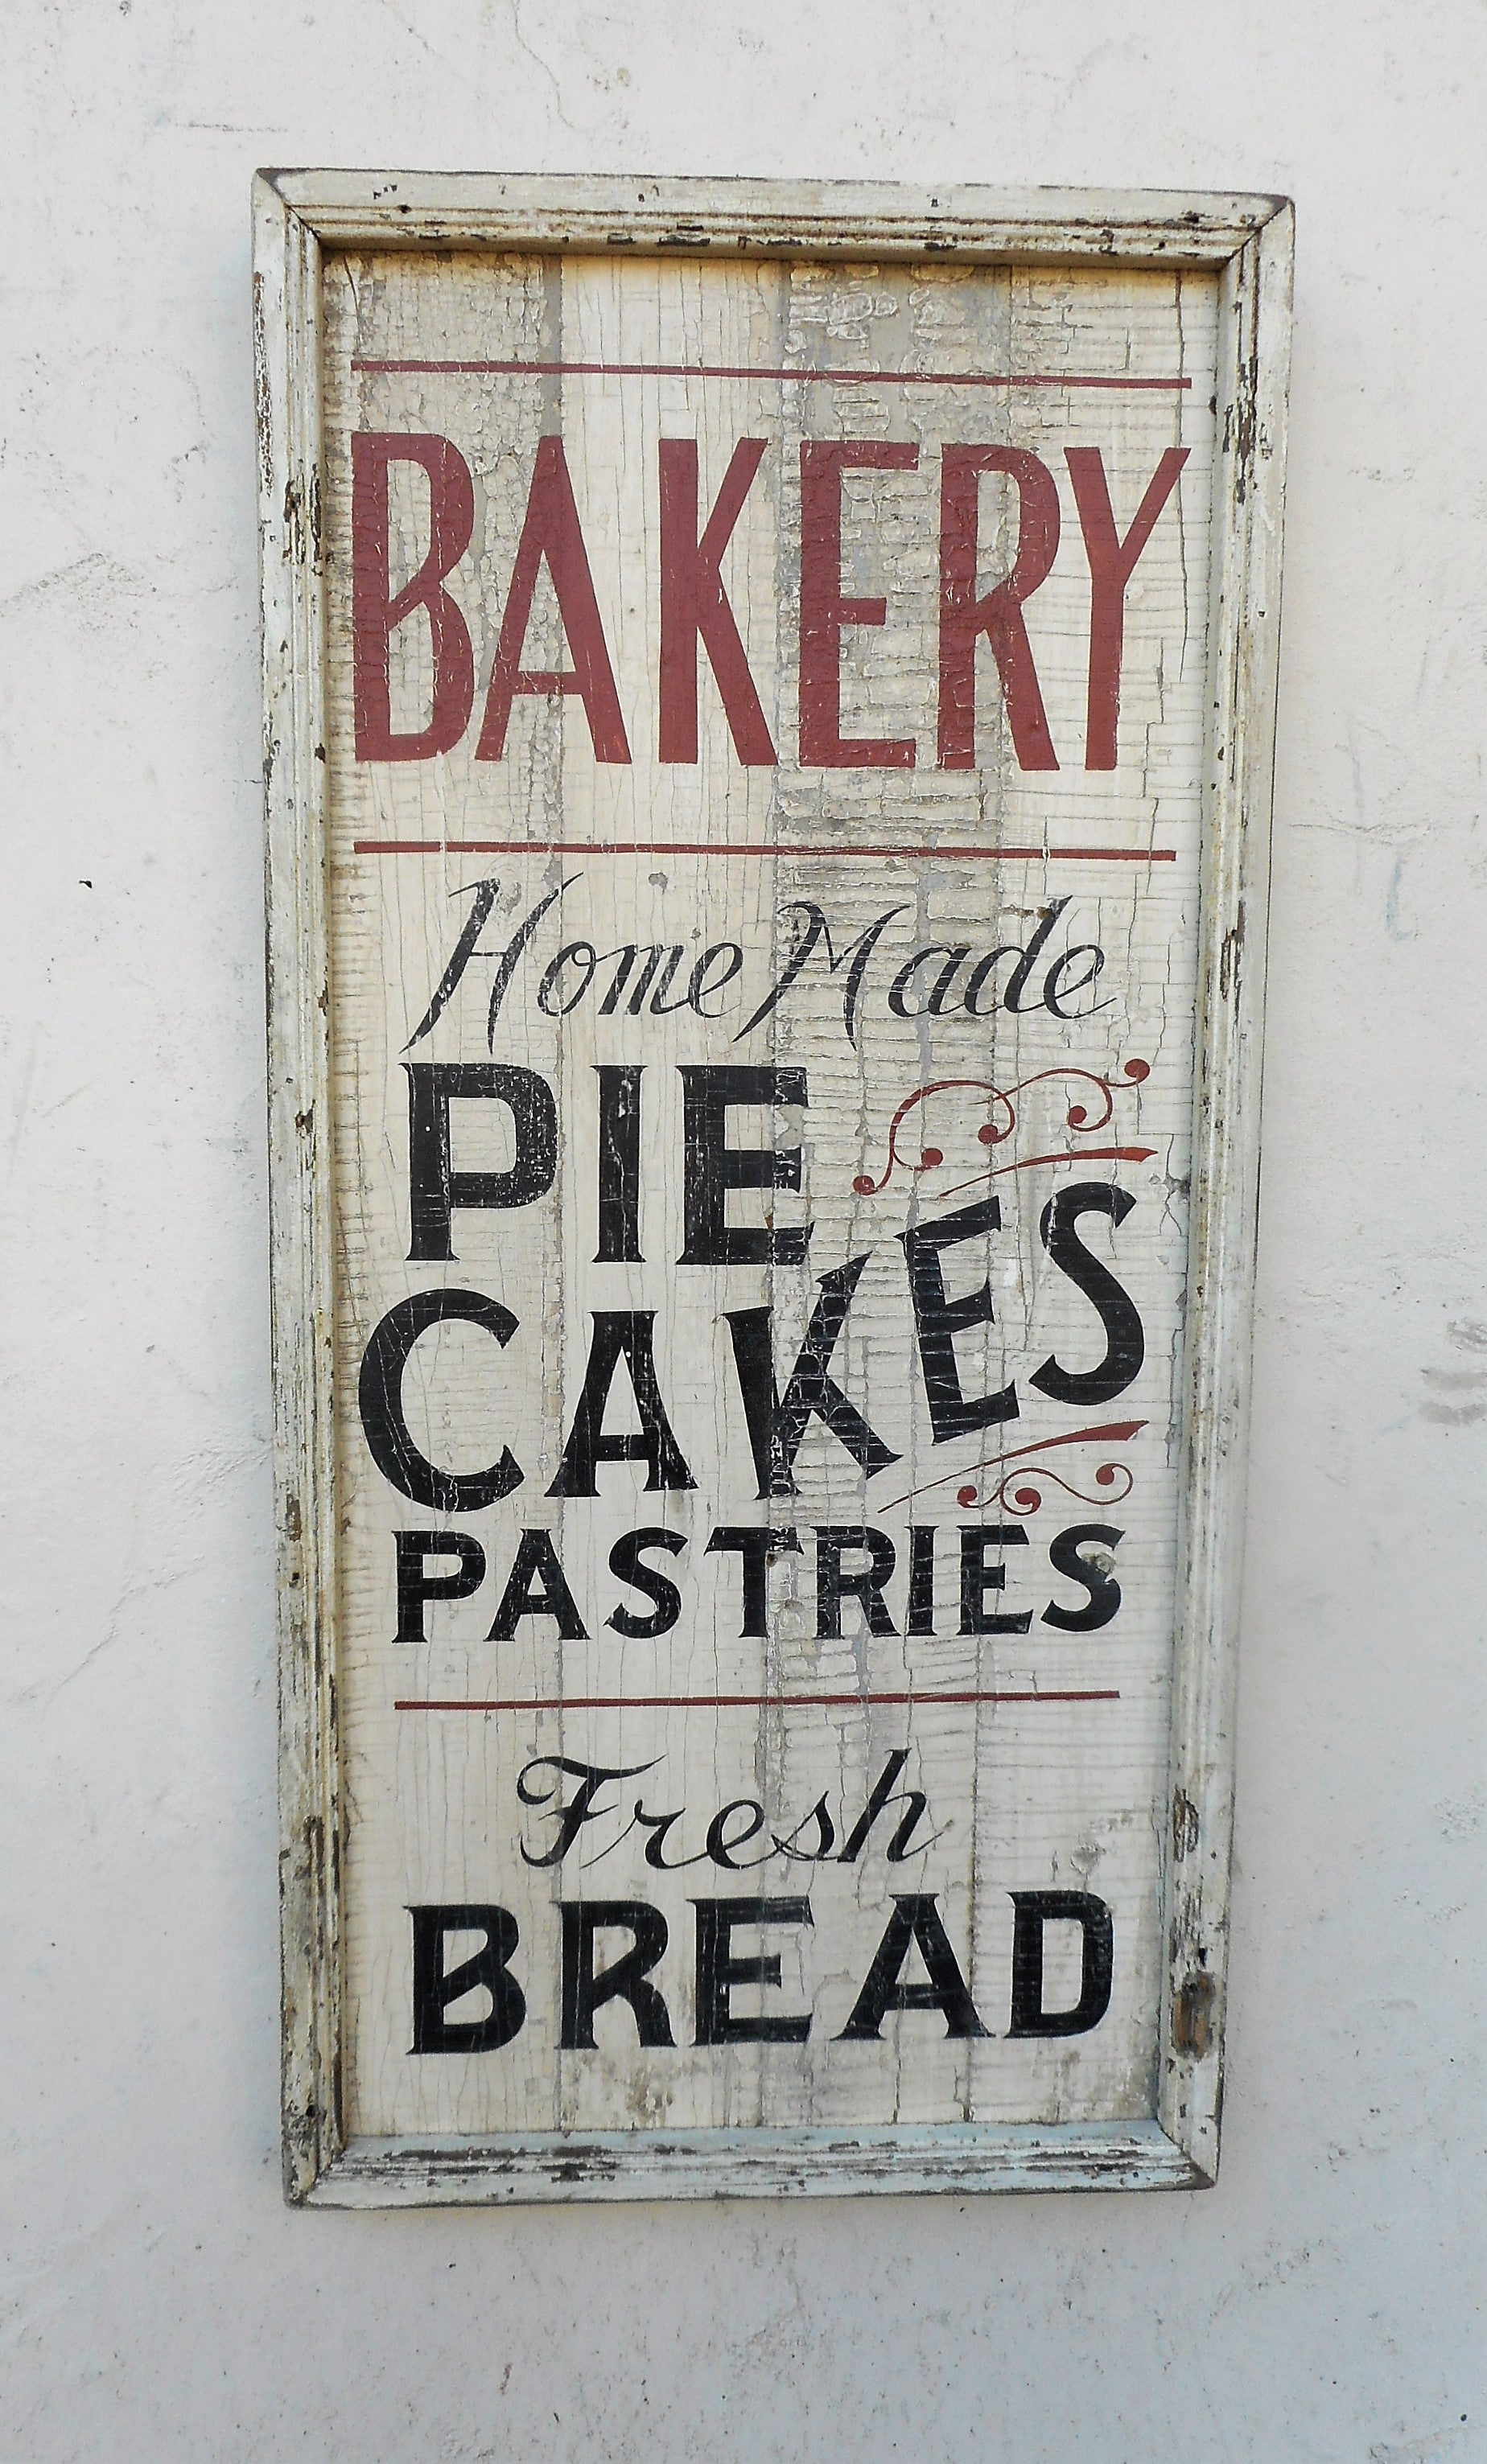 Vertical Bakery sign